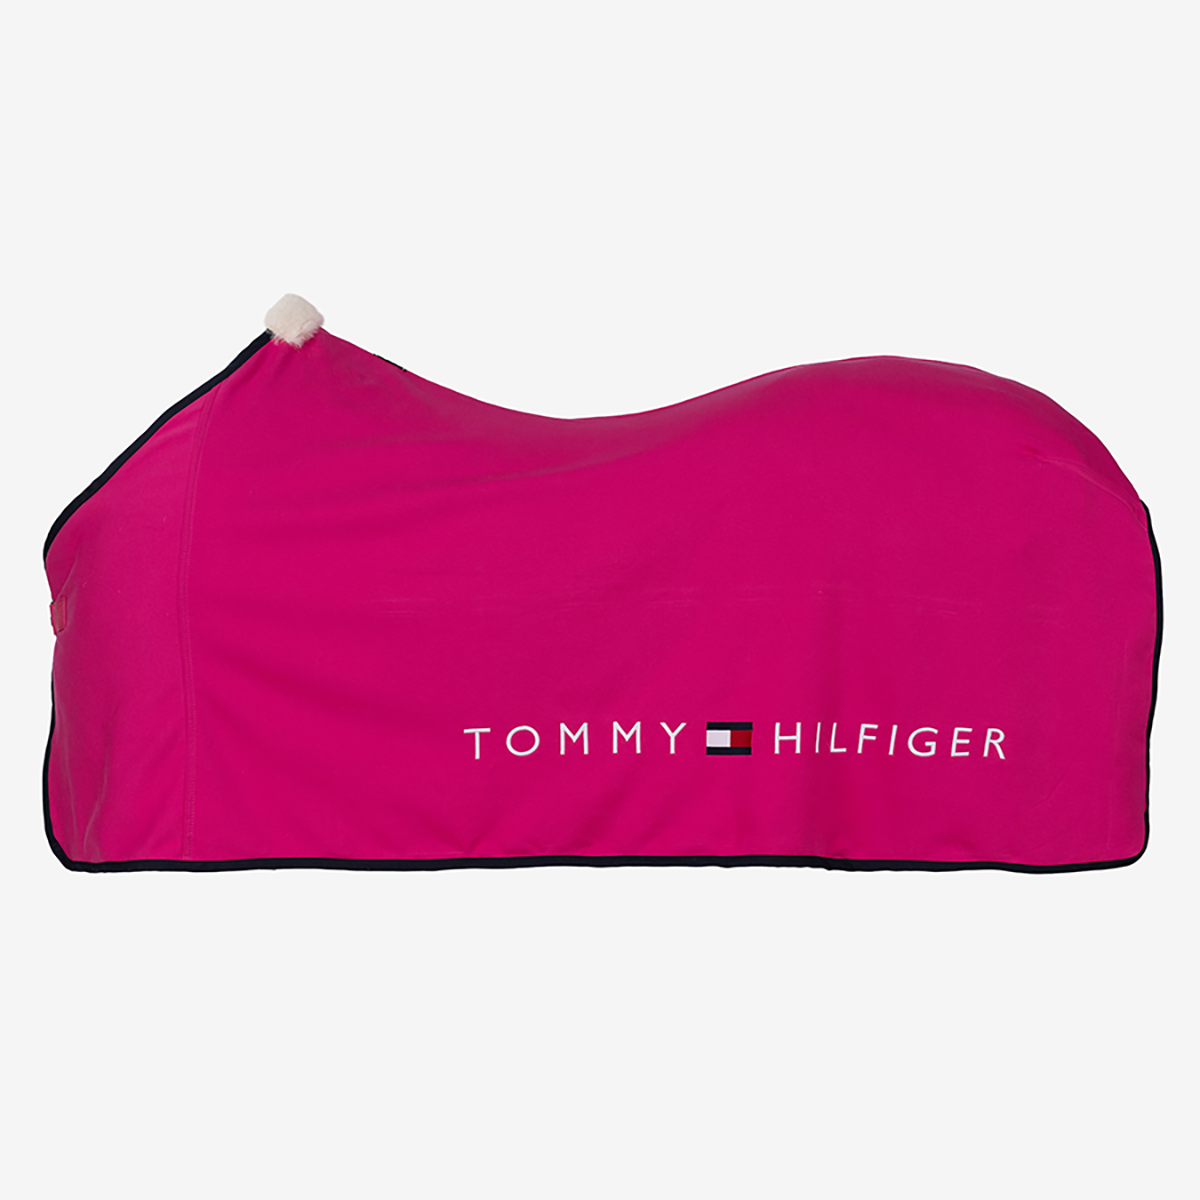 Showdeken Tommy Hilfiger Light & Dry Middenroze, 195 cm in middenroze